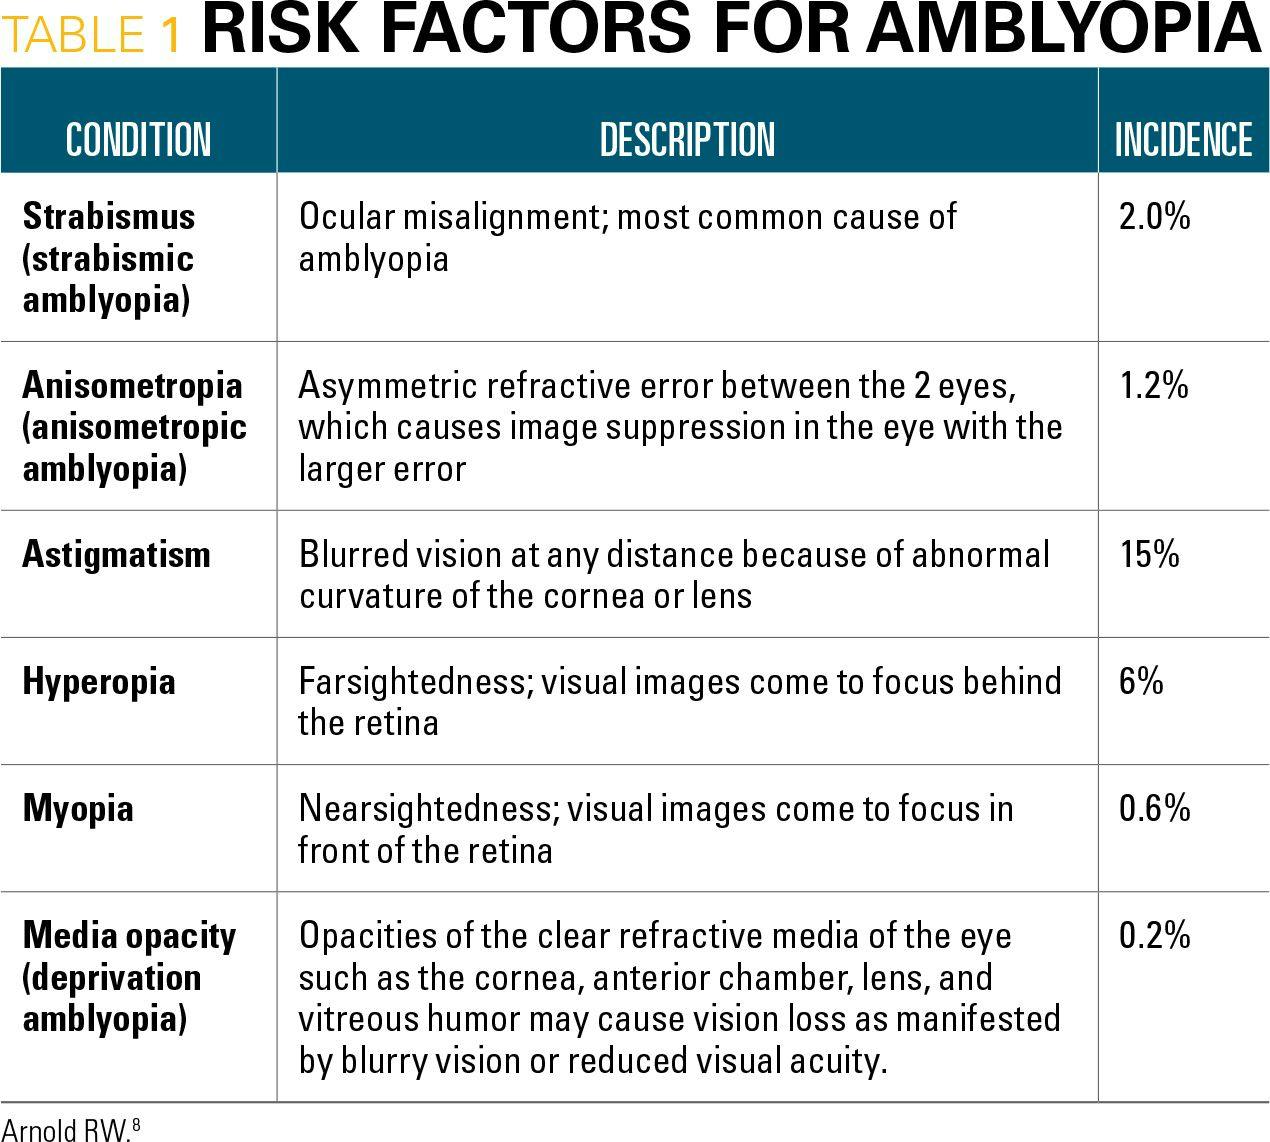 Risk factors for amblyopia